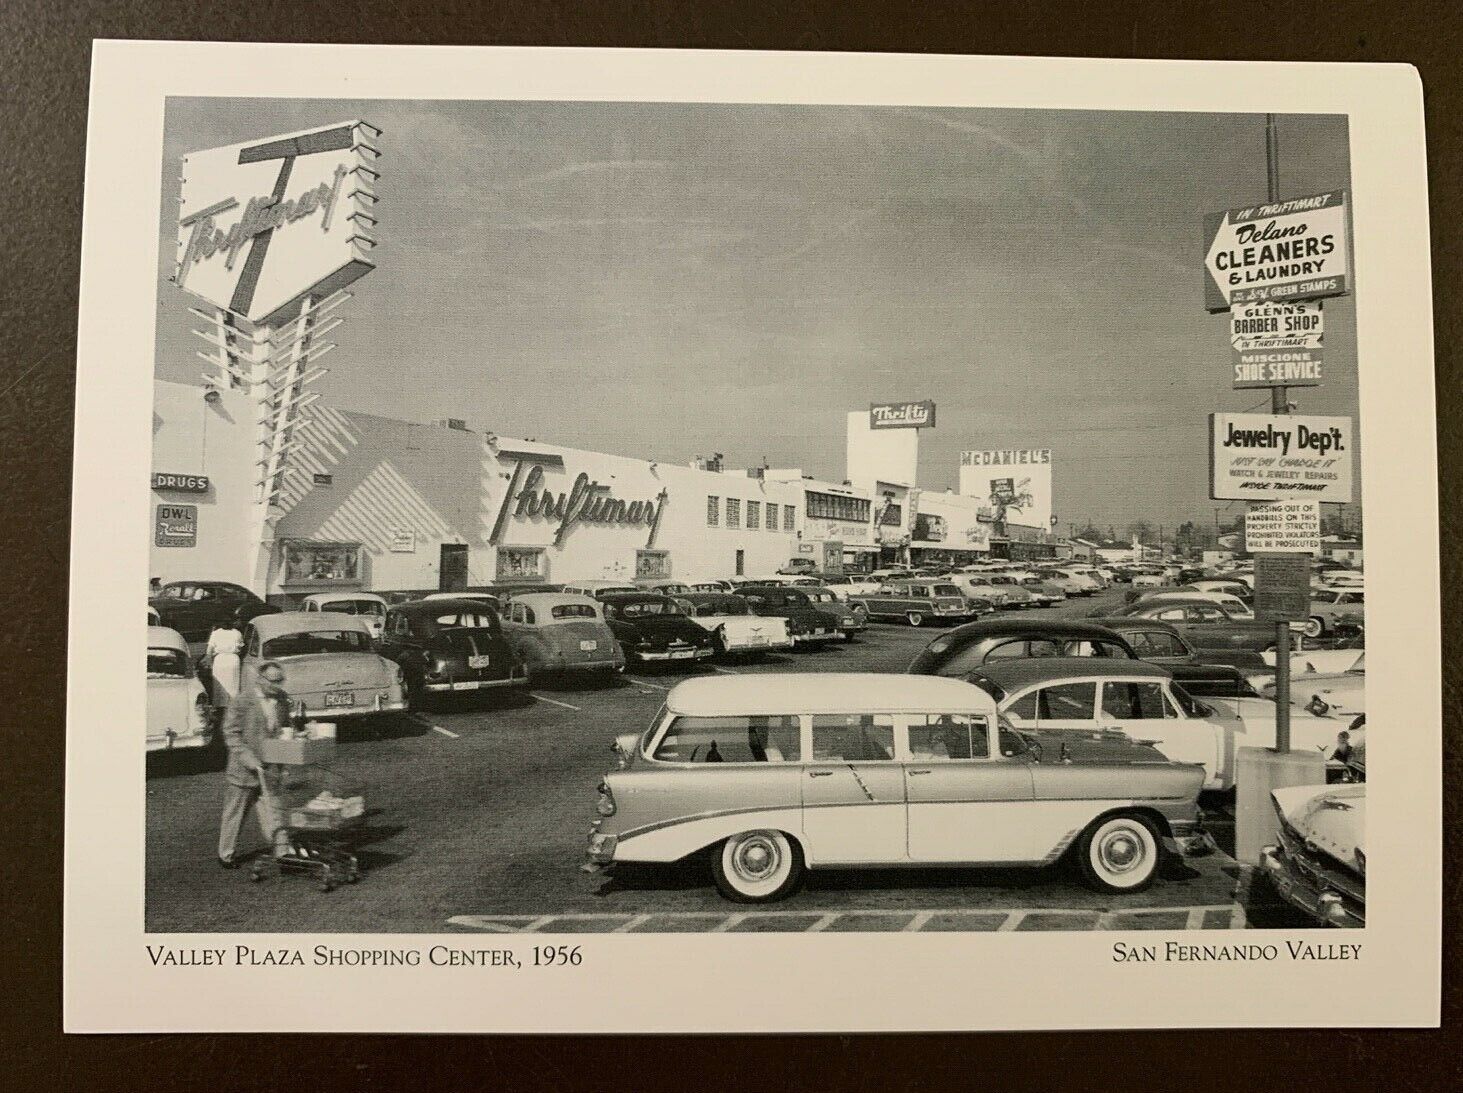 Valley Plaza Shopping - Laurel Canyon Blvd - N. Hollywood, Ca. postcard